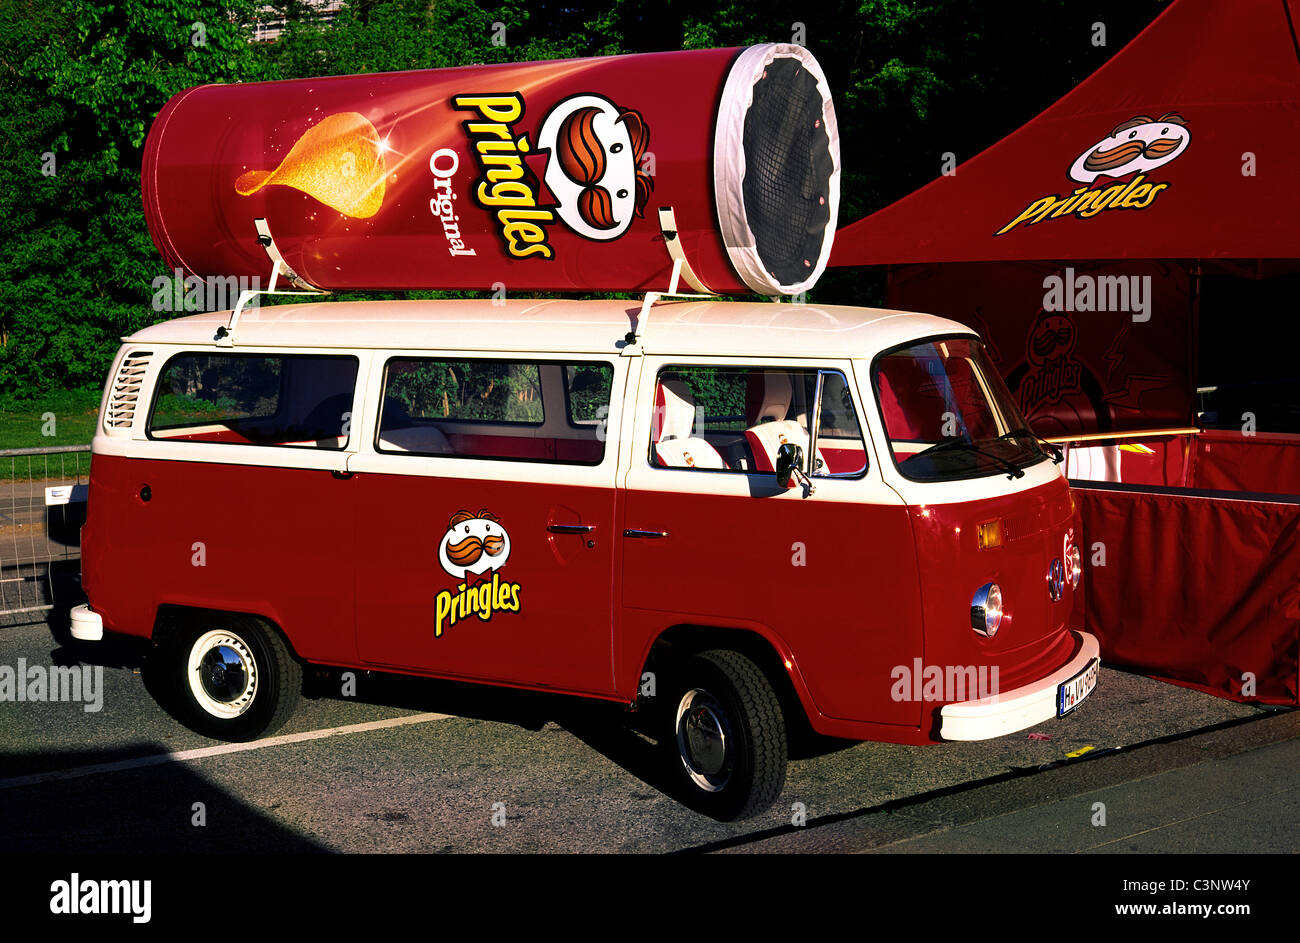 Volkswagen camper van used as commercial advertising space for Procter & Gamble's Pringles crisps in Sankt Pauli in Hamburg. Stock Photo